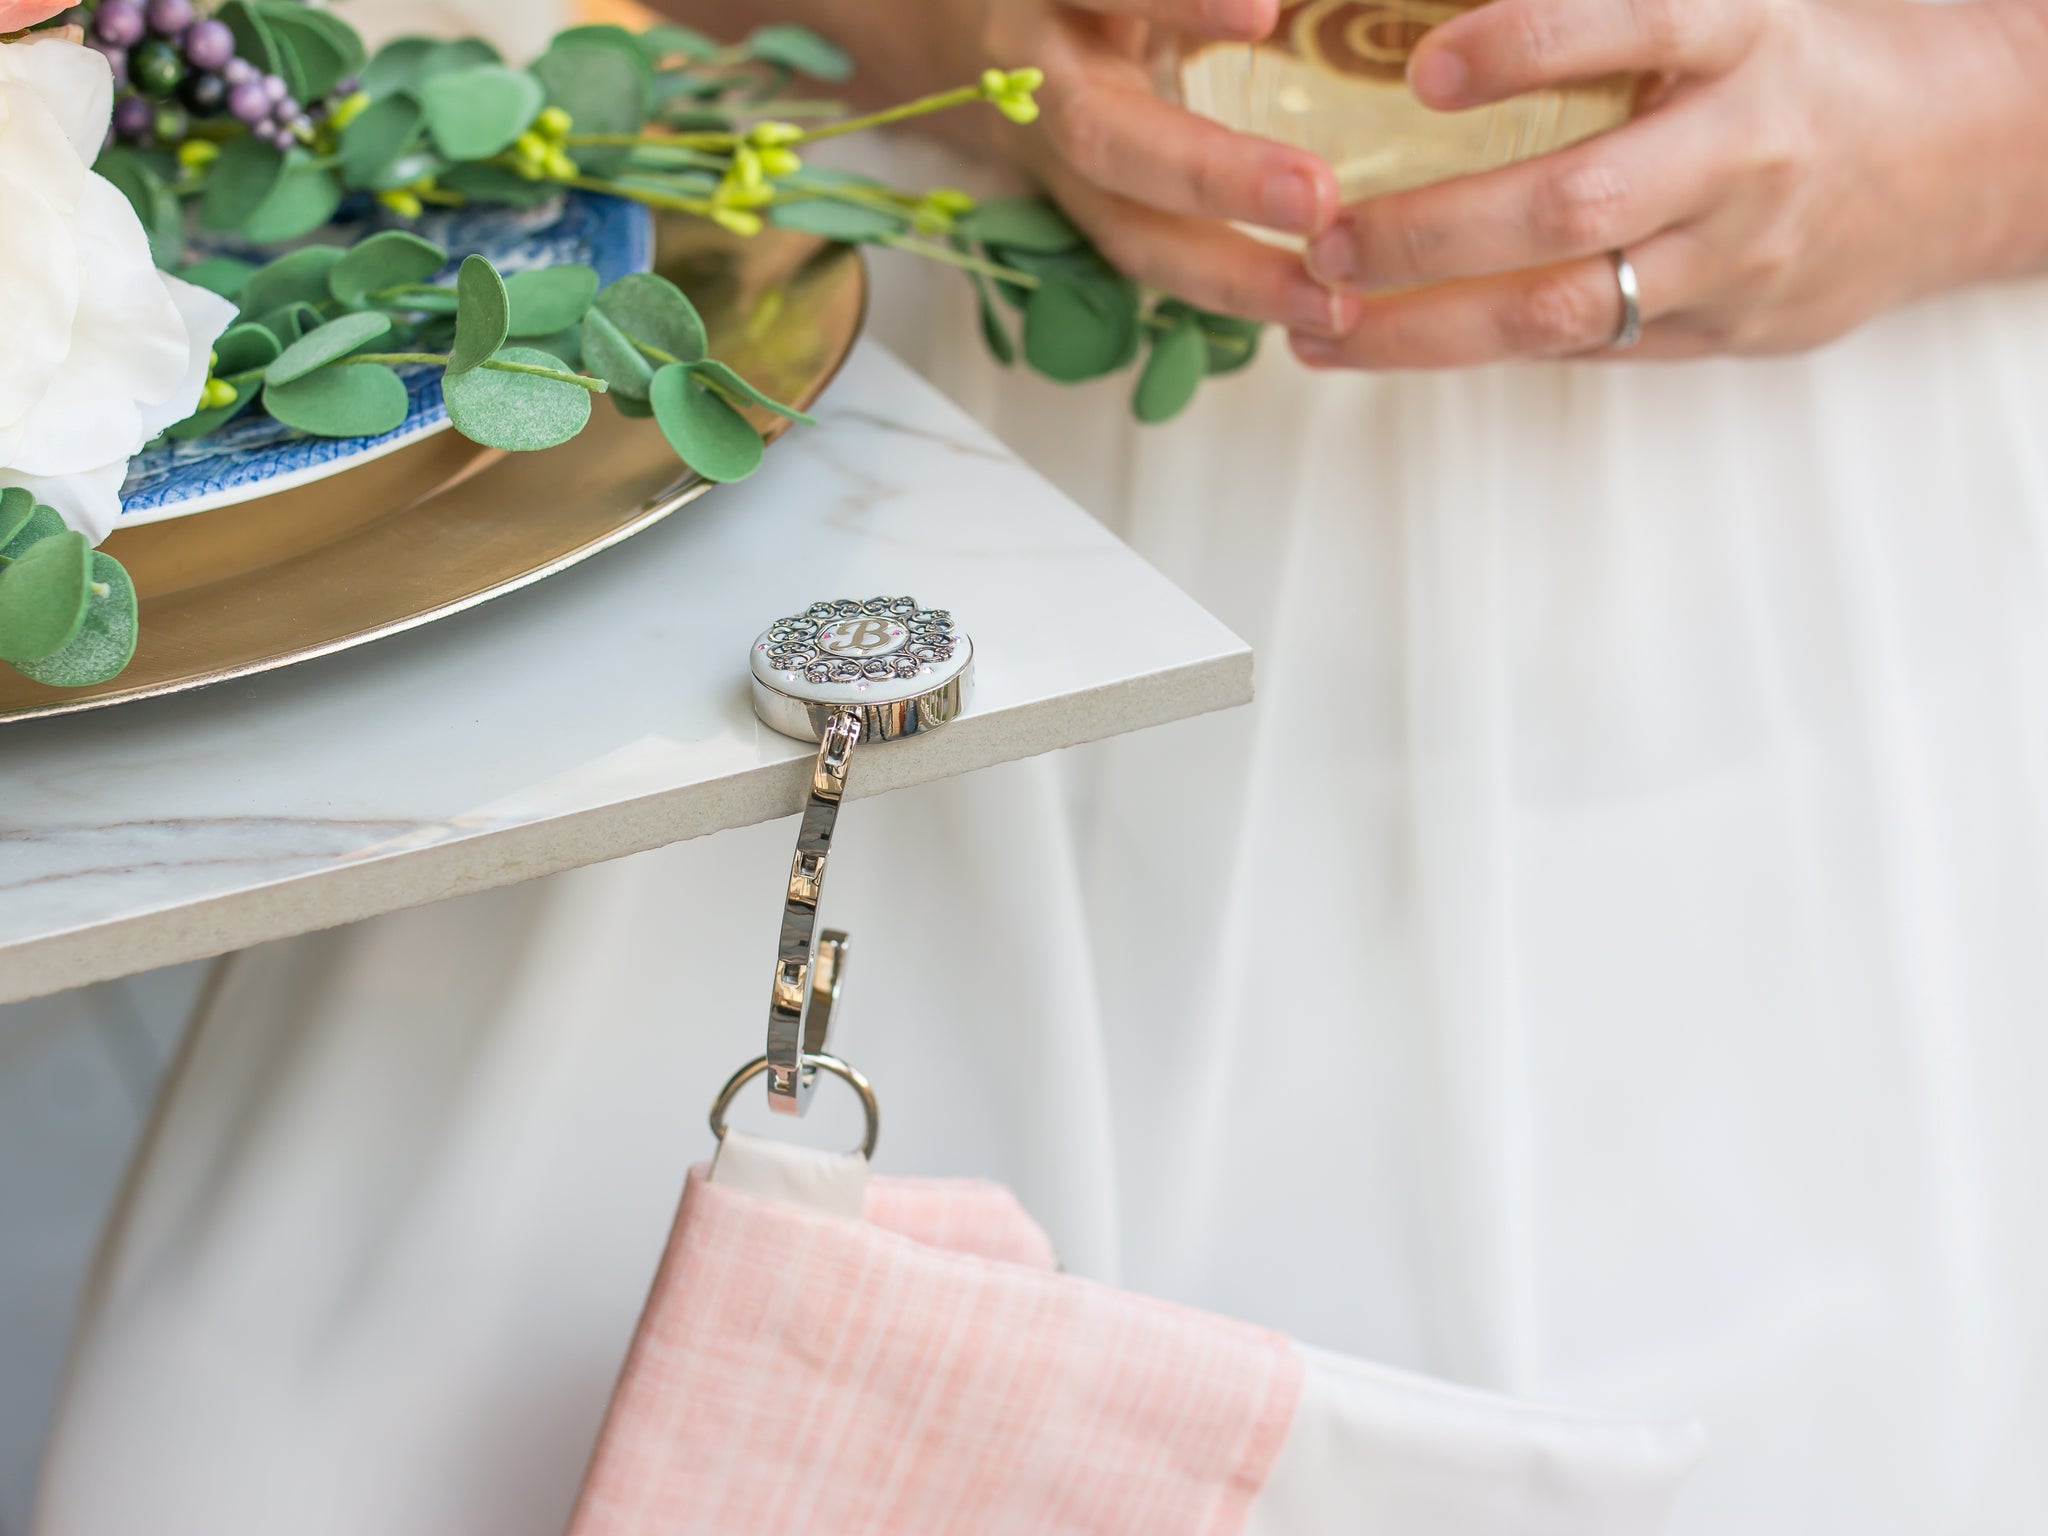 Metal Purse Ring Holder It's So Cute Beautiful On Any Dresser Or Bathroom |  eBay